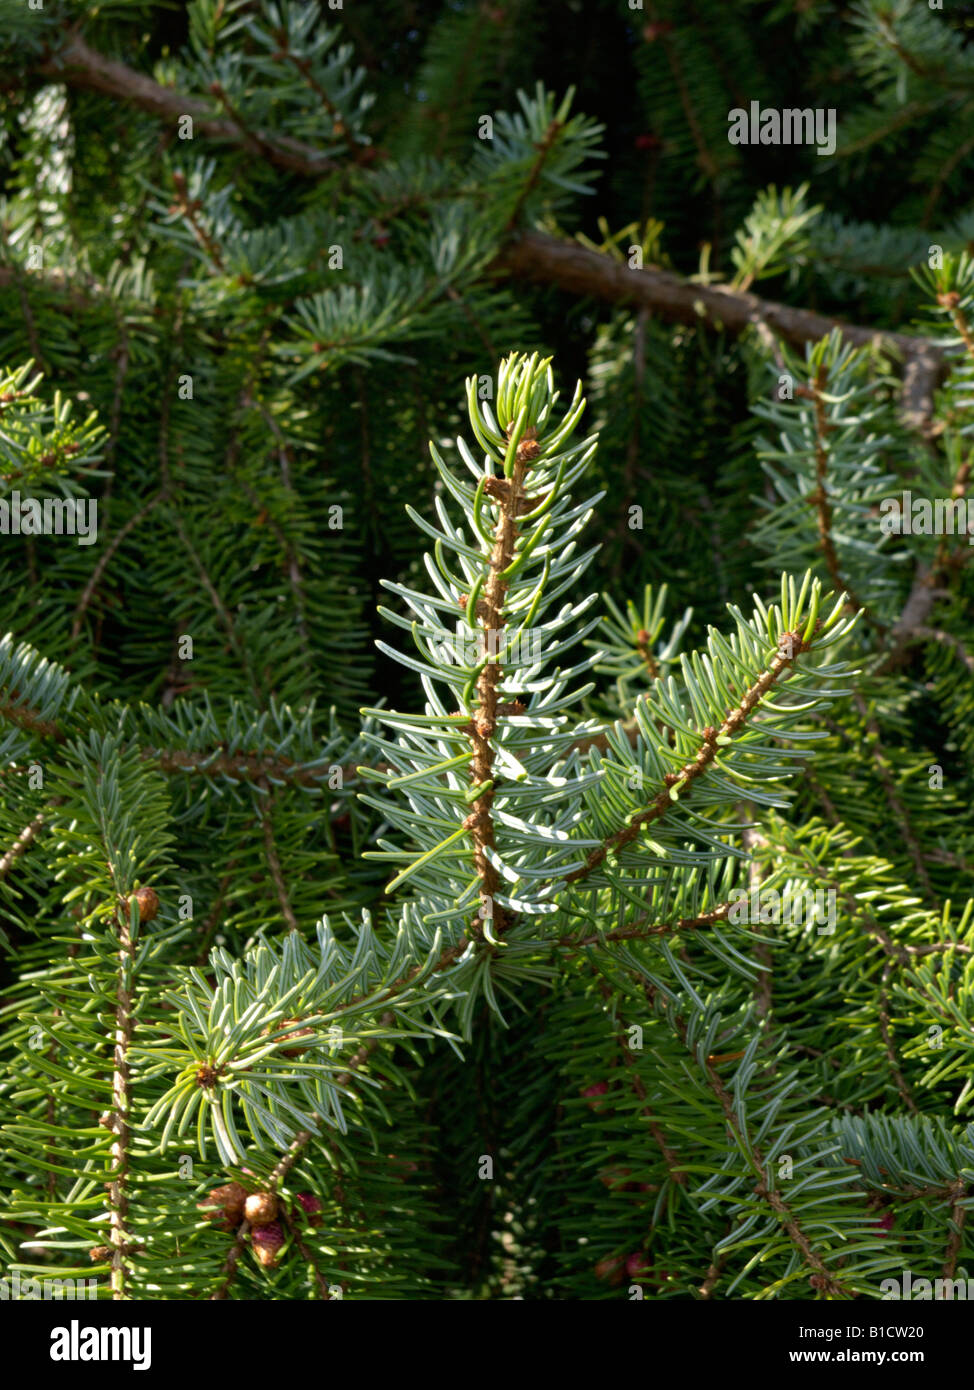 Serbian spruce (Picea omorika) Stock Photo